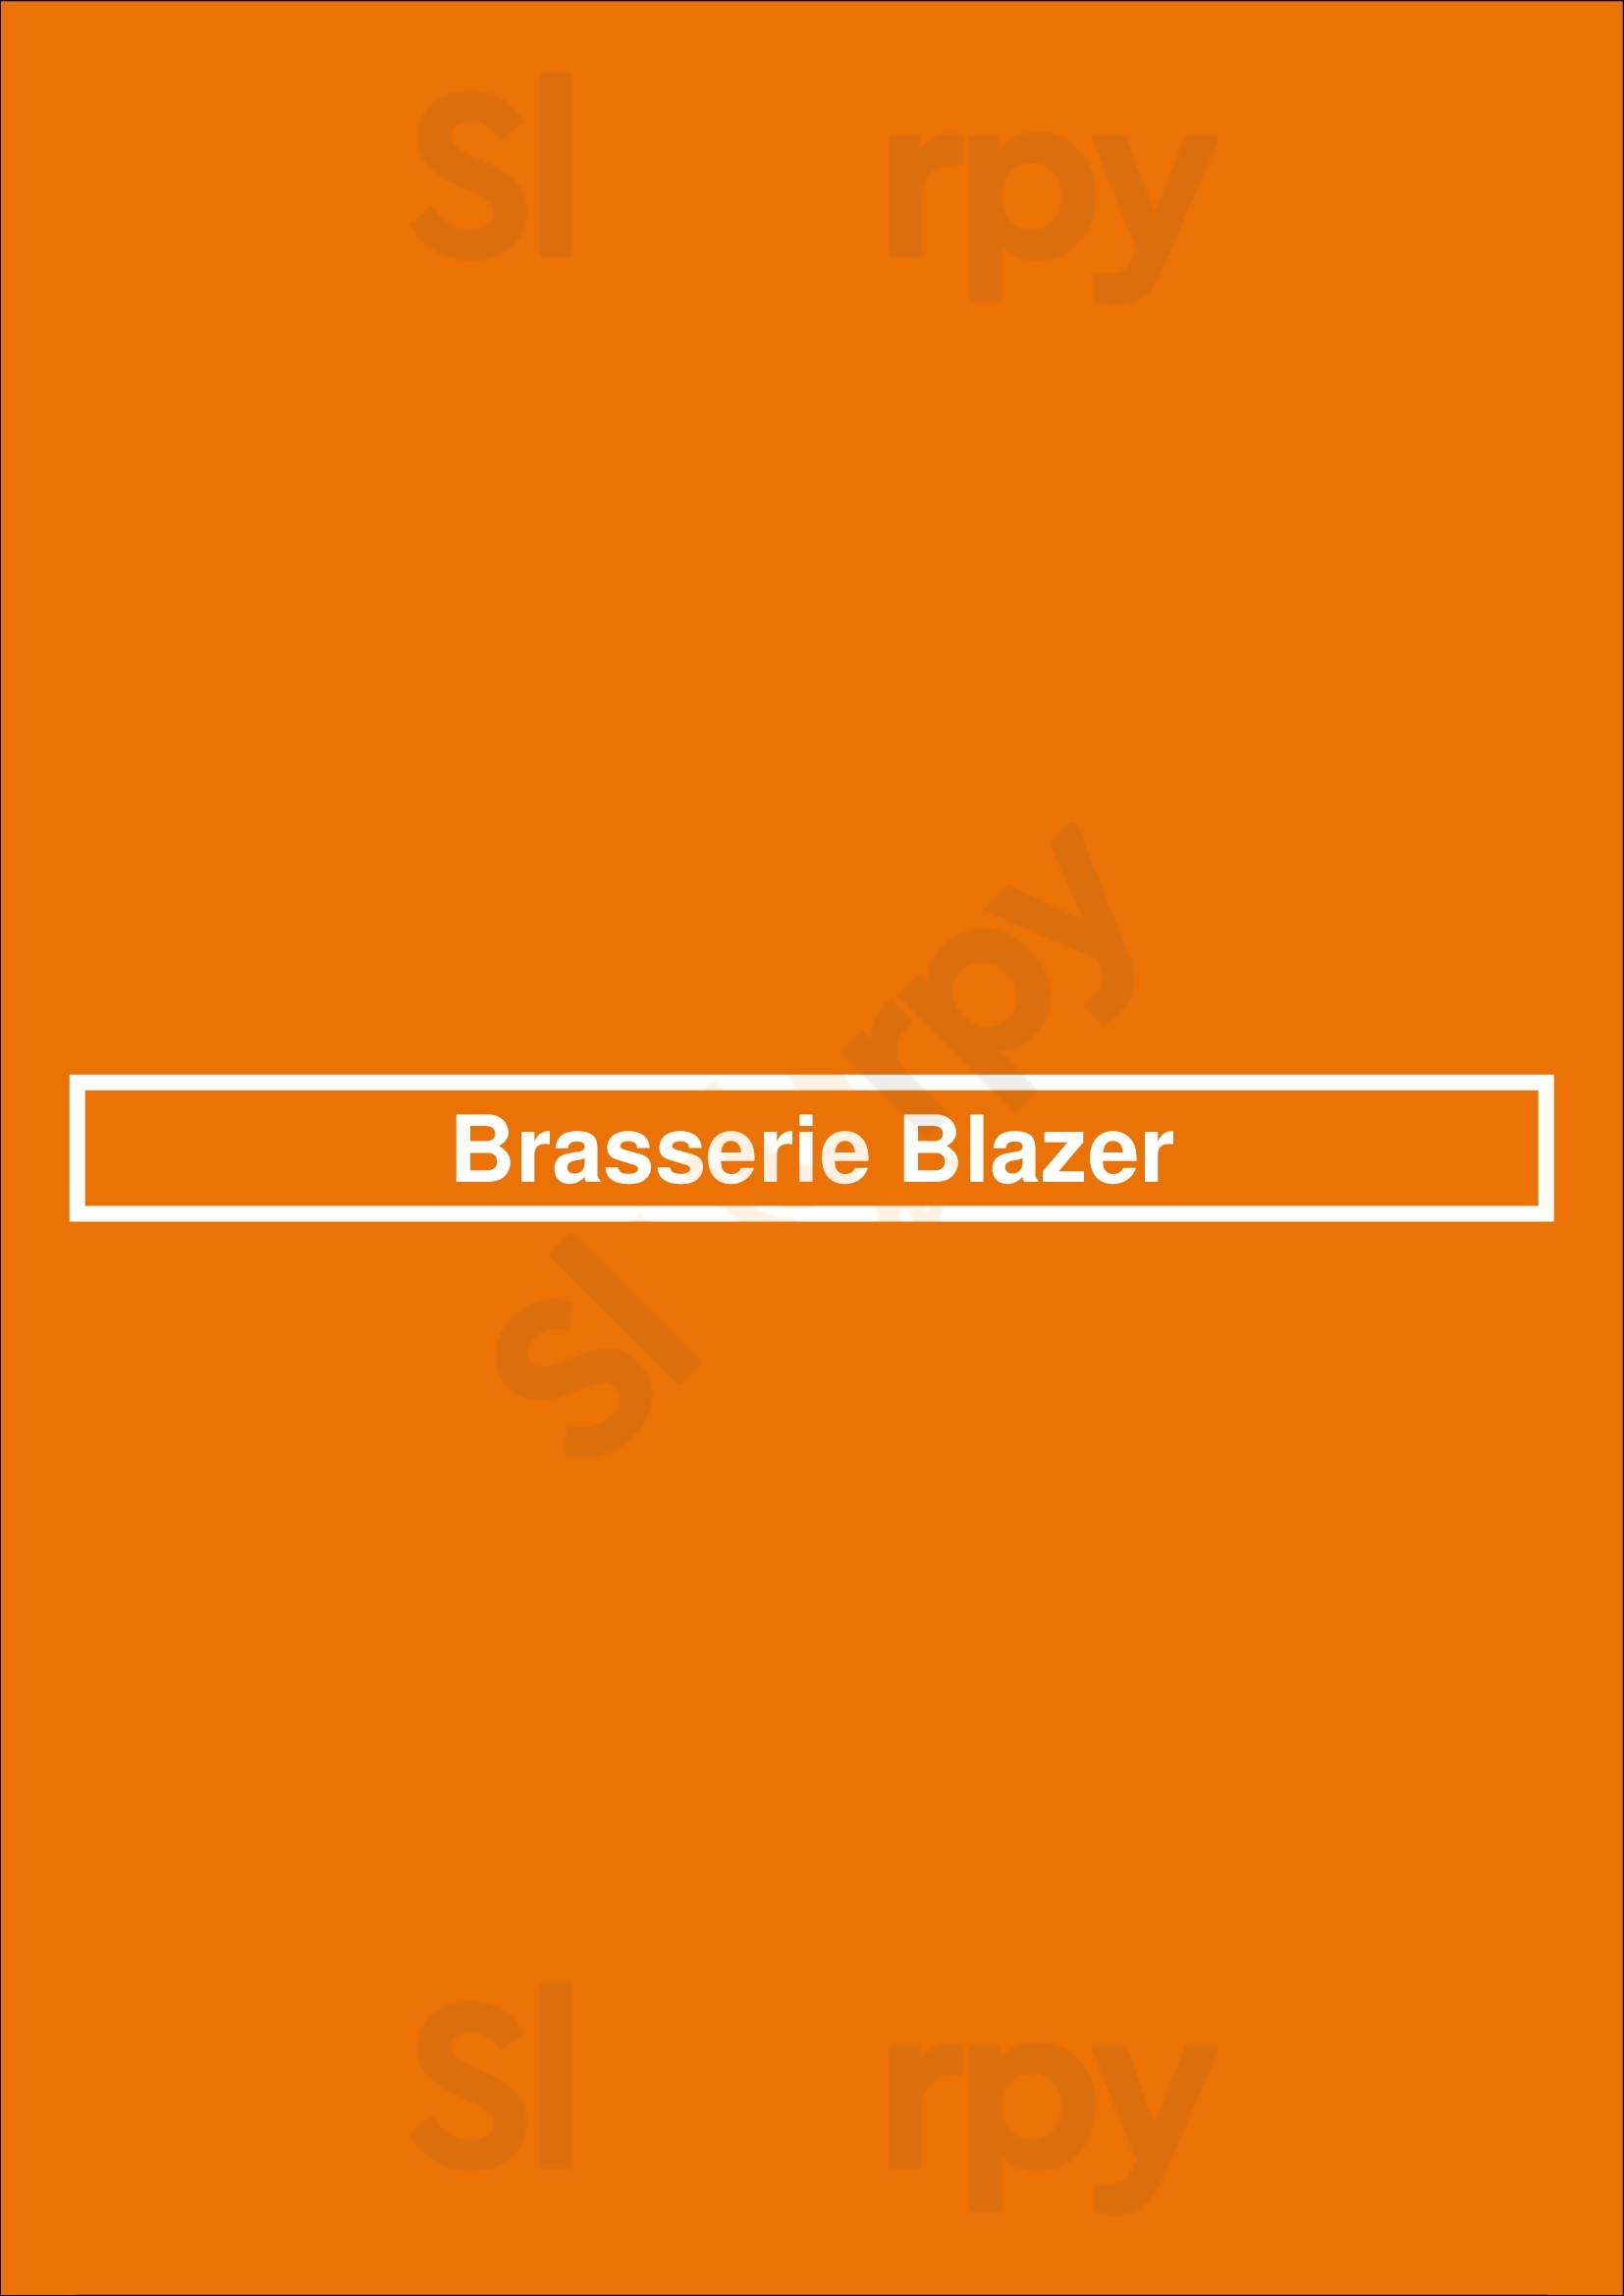 Brasserie Blazer Amsterdam Menu - 1